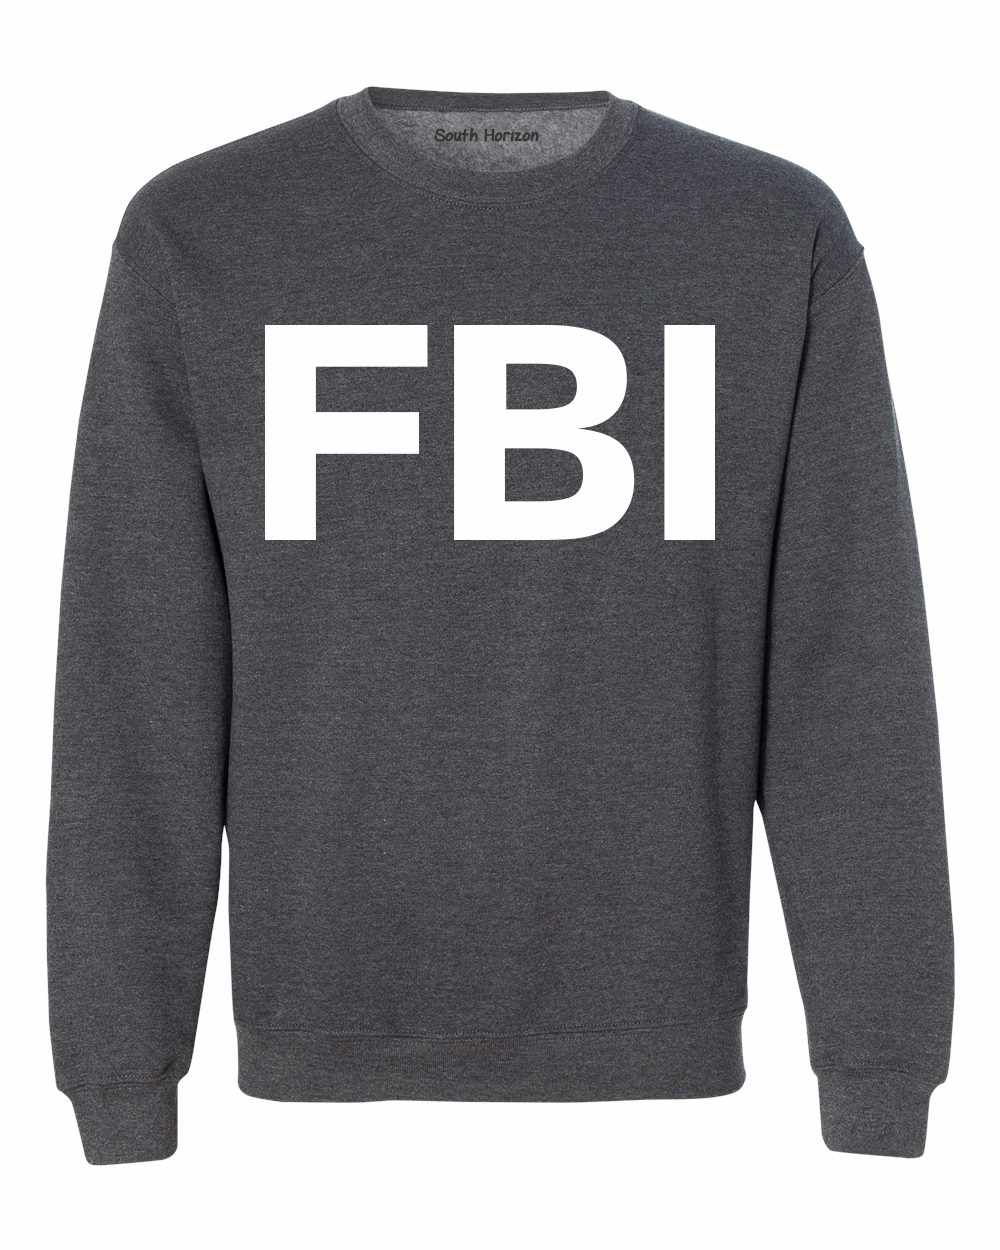 FBI Sweat Shirt (#402-11)